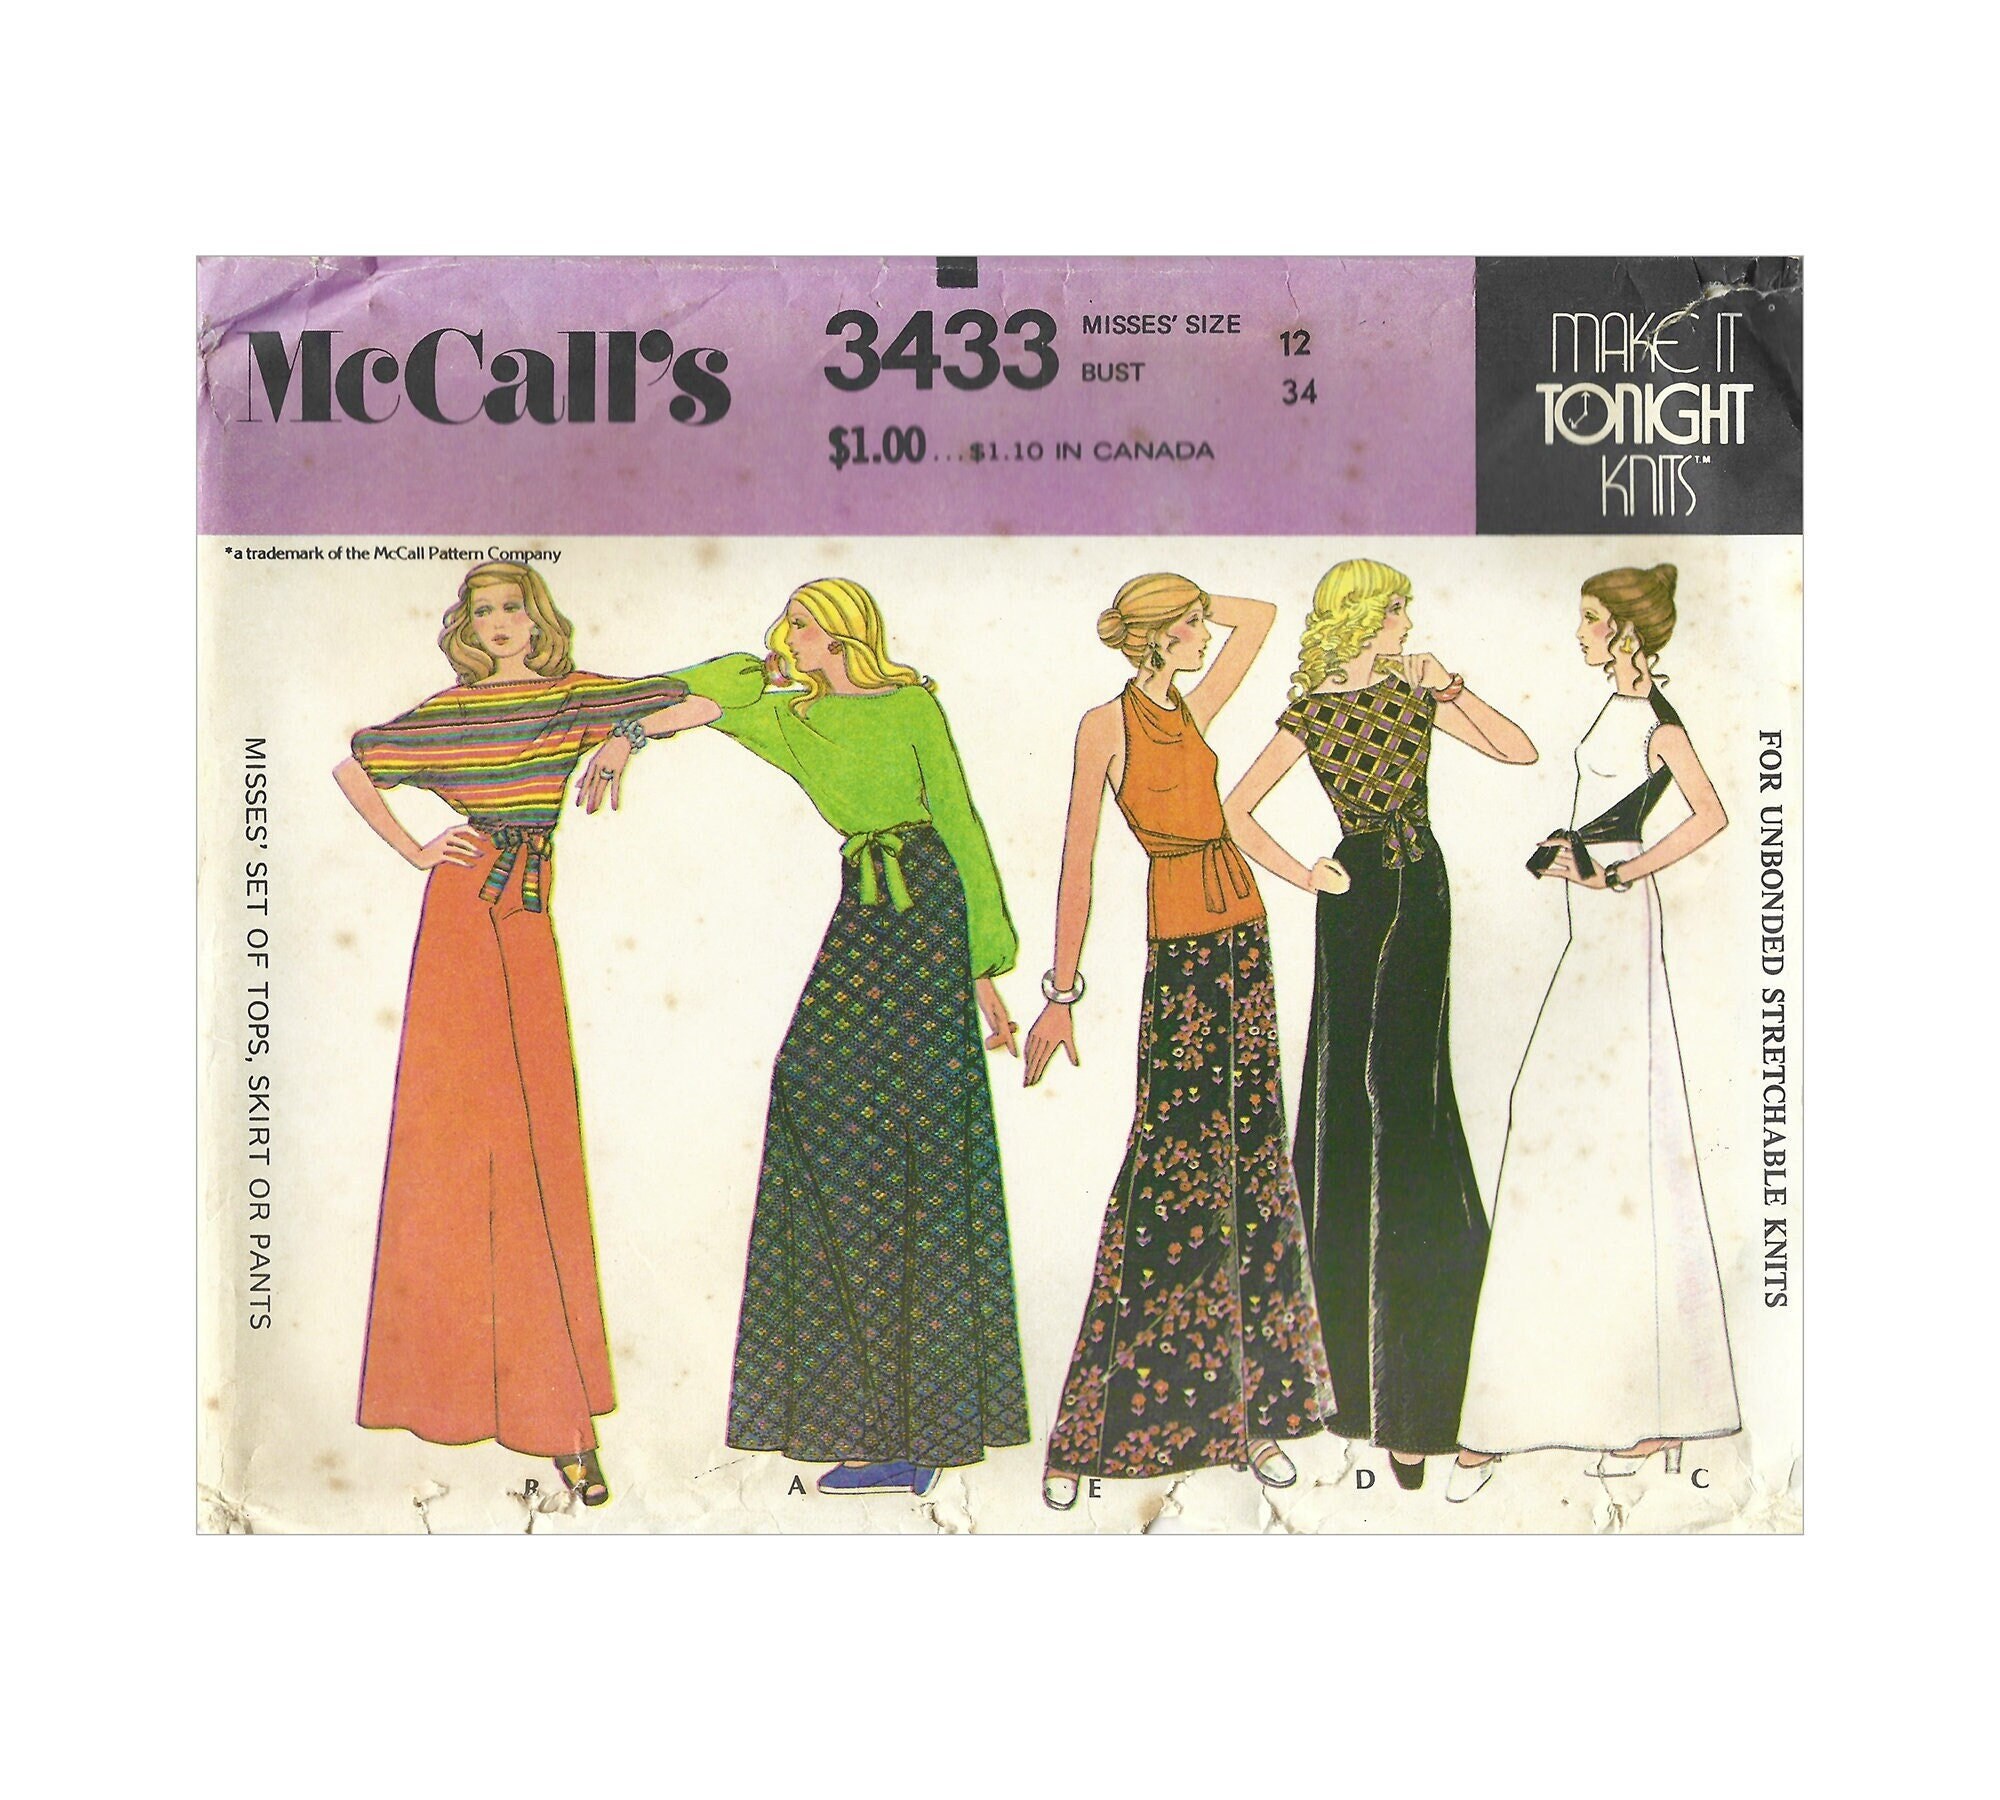 Vintage 1970s Sewing Pattern Mccalls 3433 Misses Cowl or Boat Neck Knit ...